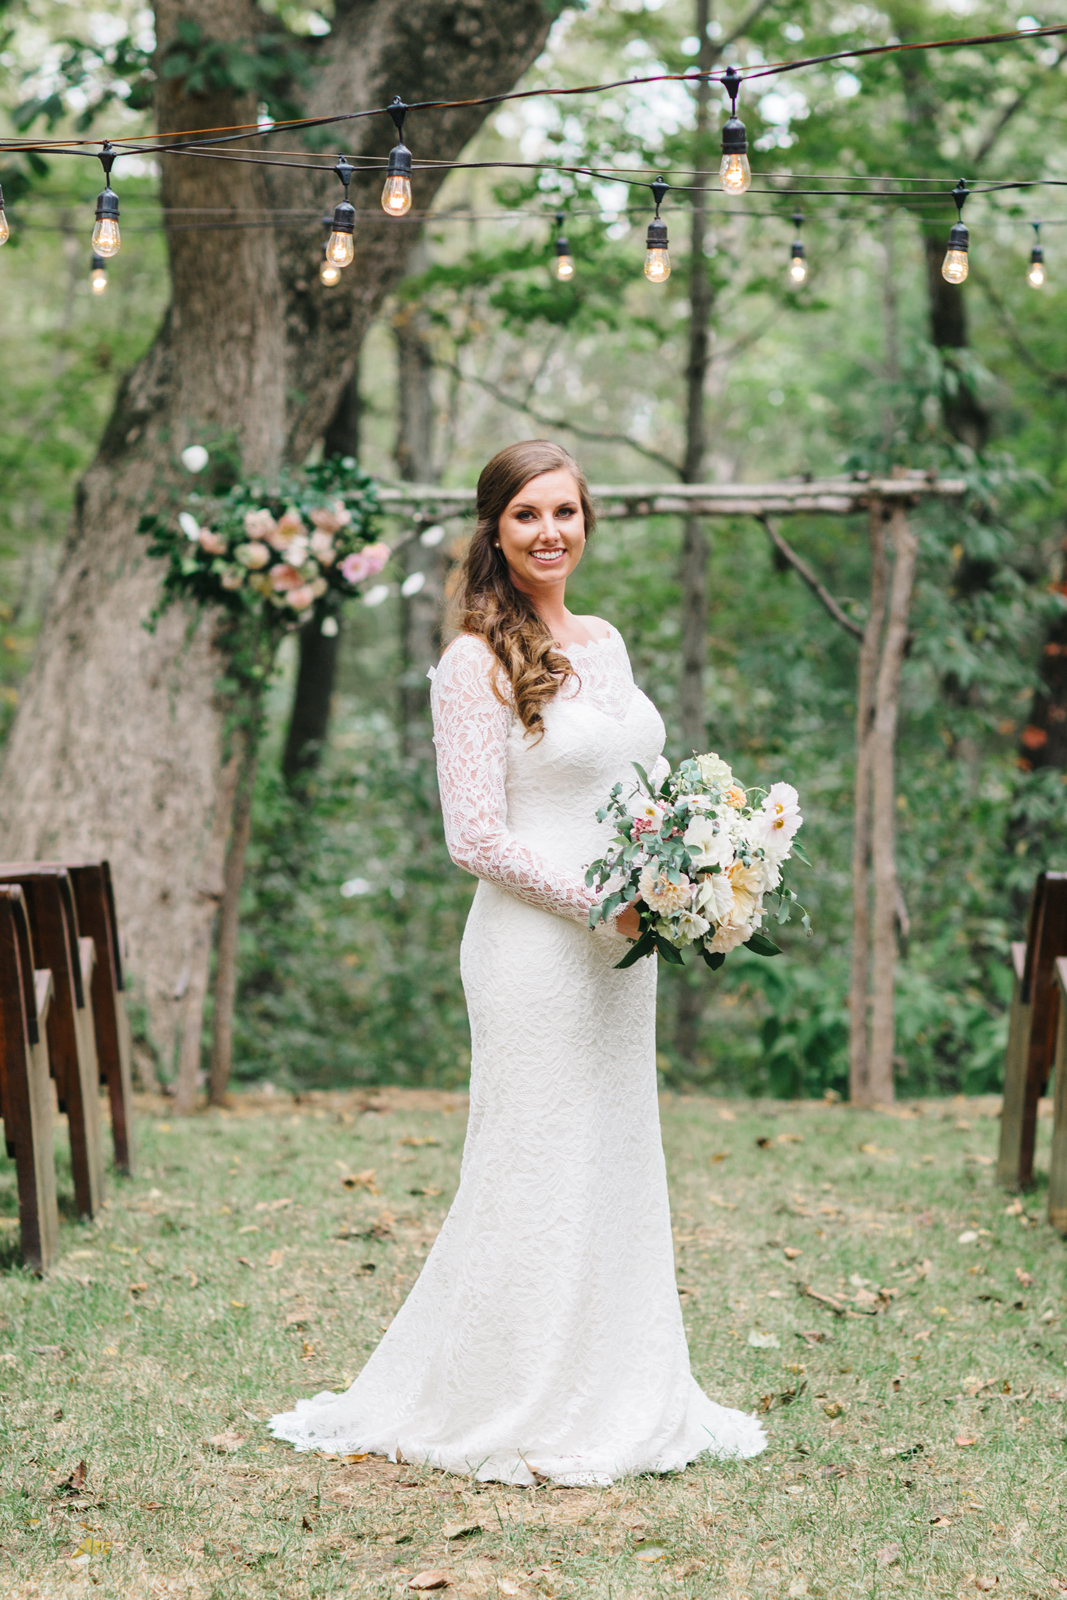 Nashville TN Wedding Photographer Laura K. Allen | Wedding at The Wren's Nest